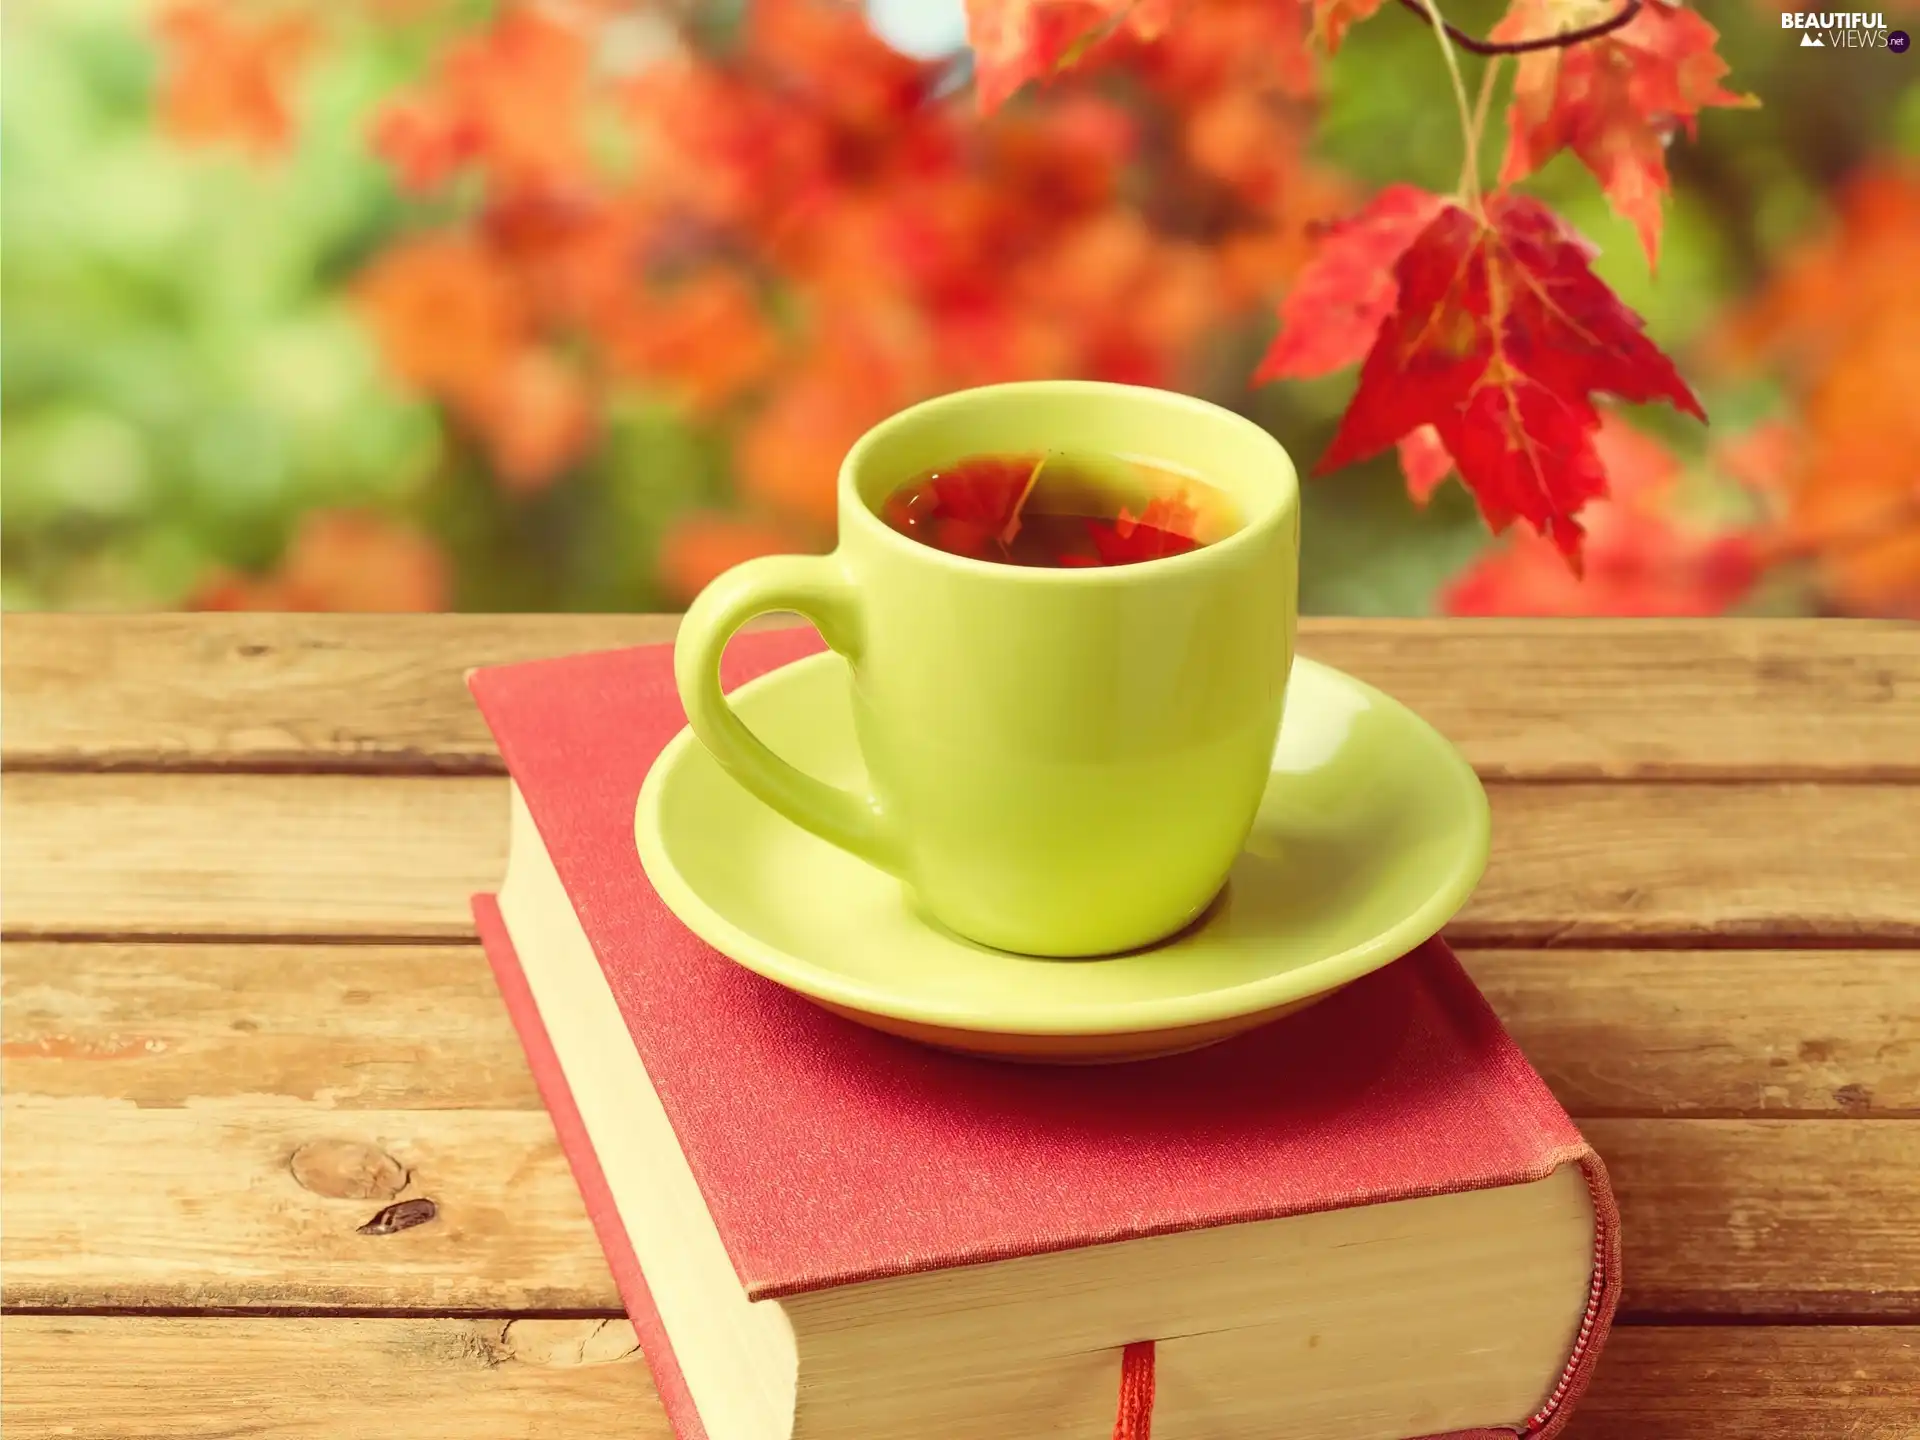 Book, cup, Leaf, Bench, Autumn, tea